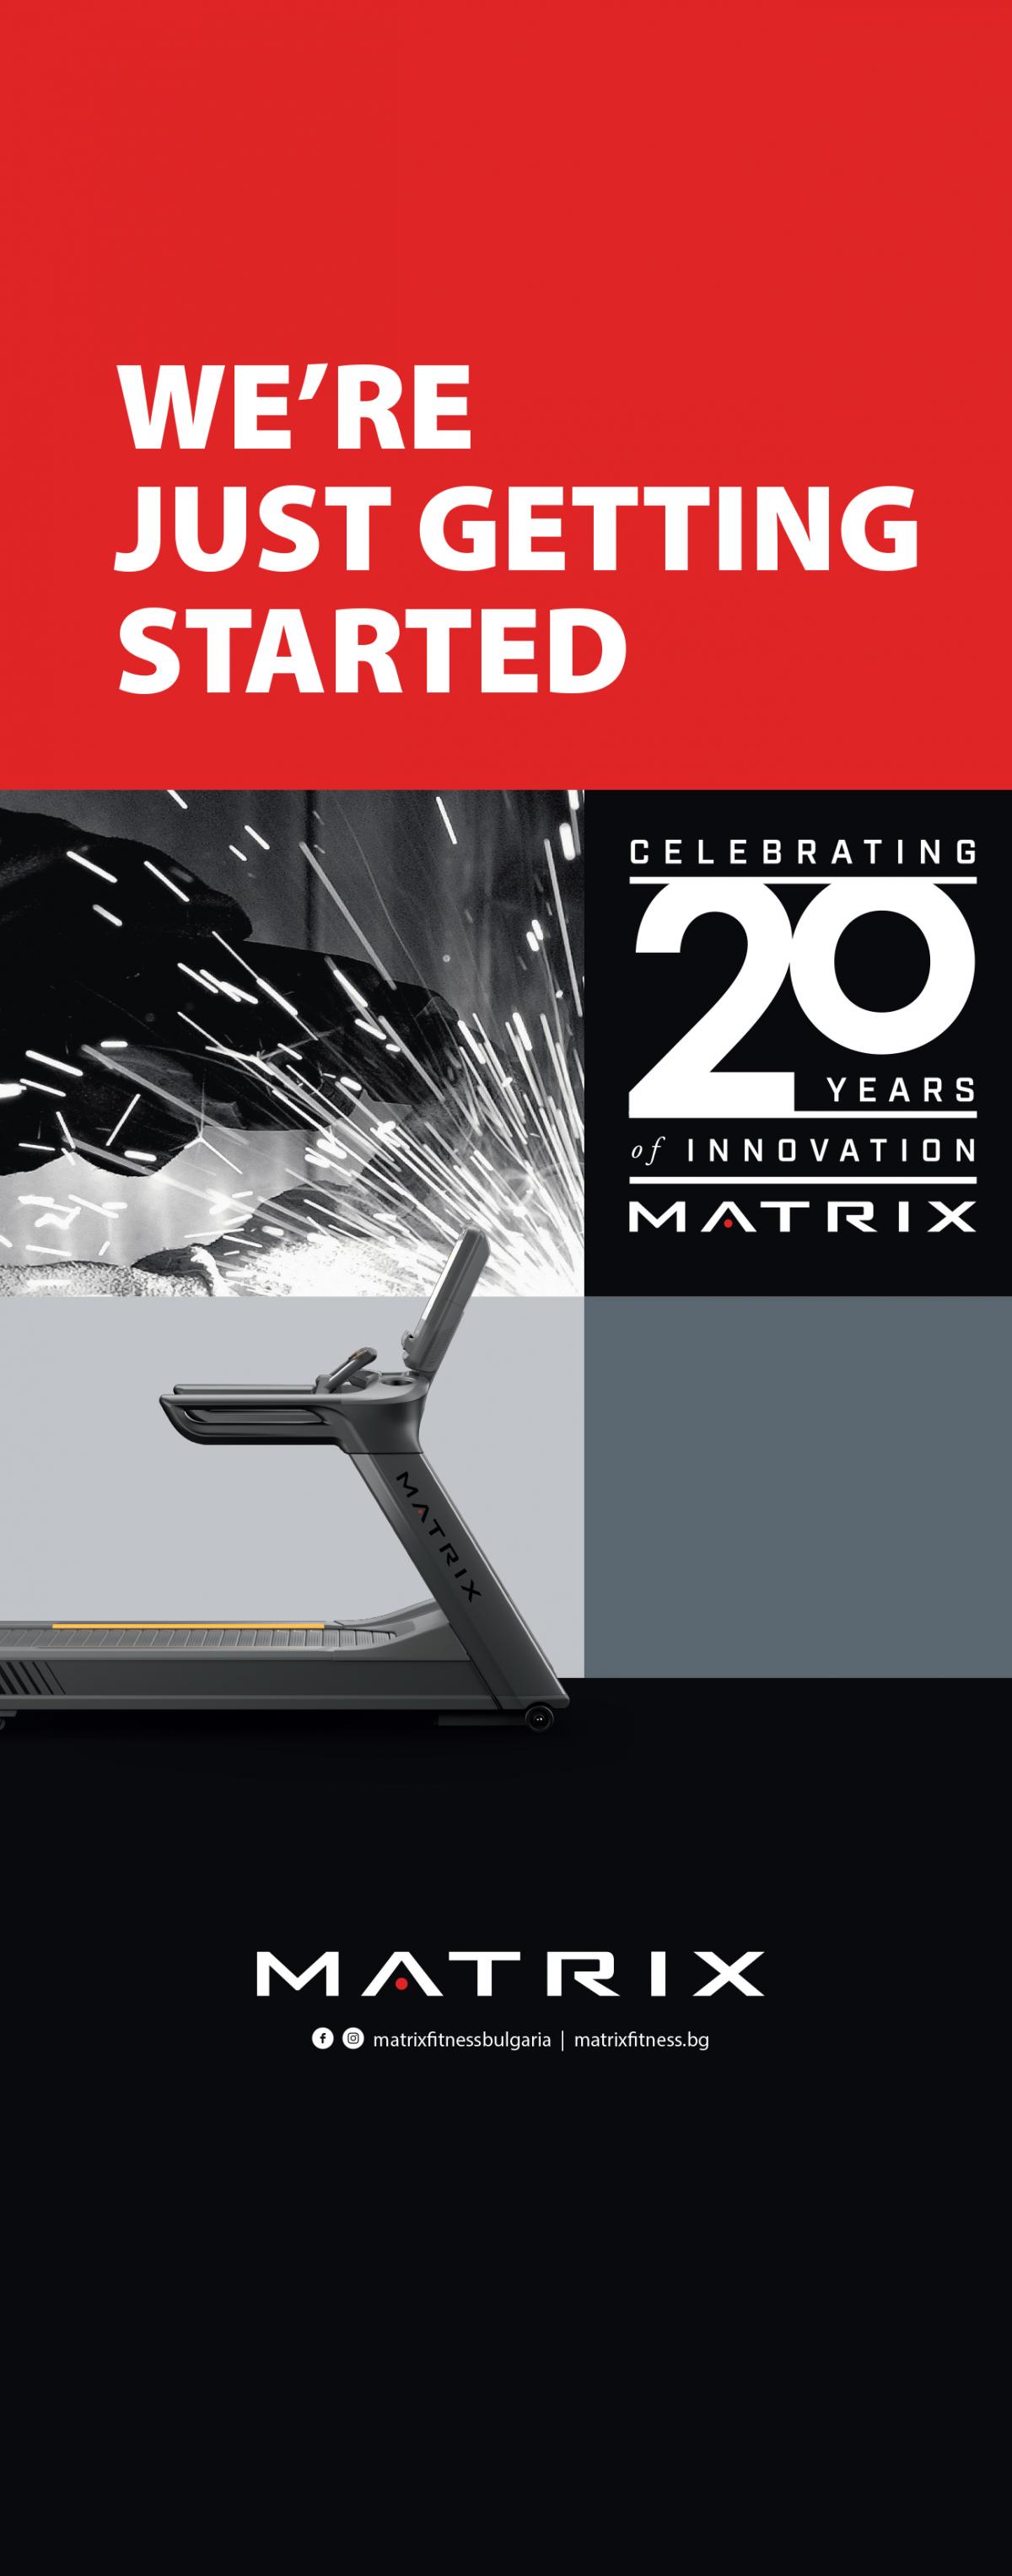 Matrix Fitness celebrates its 20th anniversary